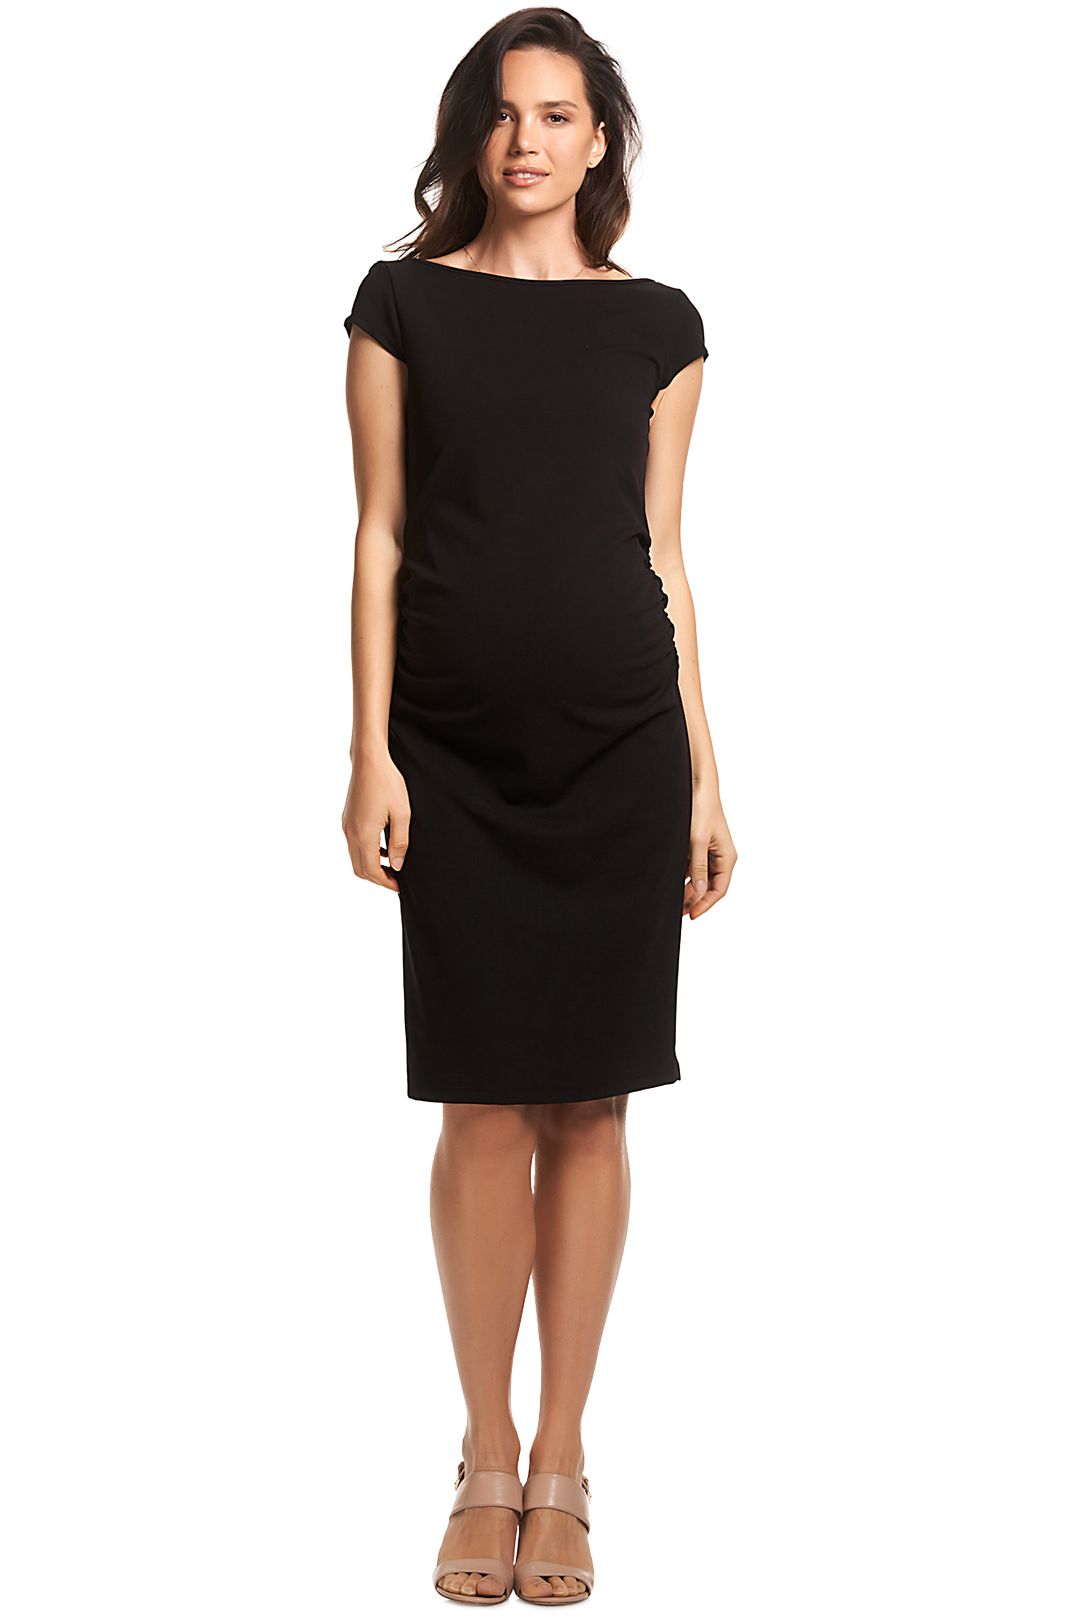 https://imageb.gc-static.com/media/catalog/product/s/o/soon-maternity-leo-cap-sleeve-dress-black-front2.jpg